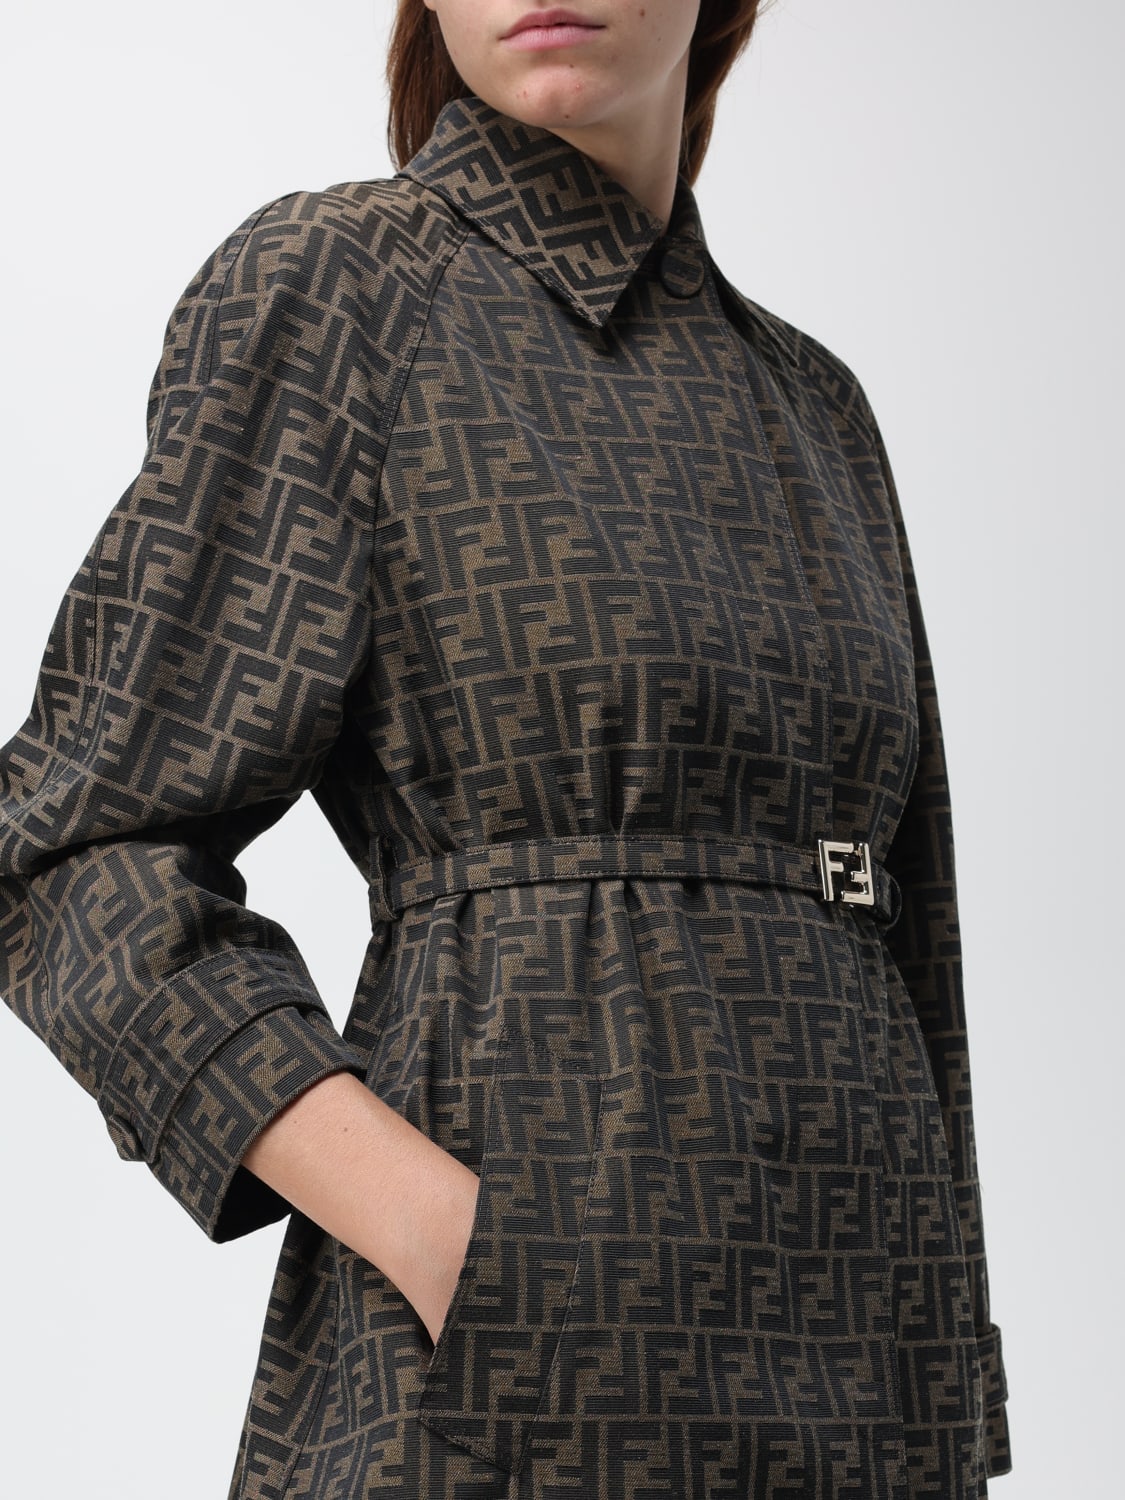 FENDI: trench coat for women - Tobacco | Fendi trench coat